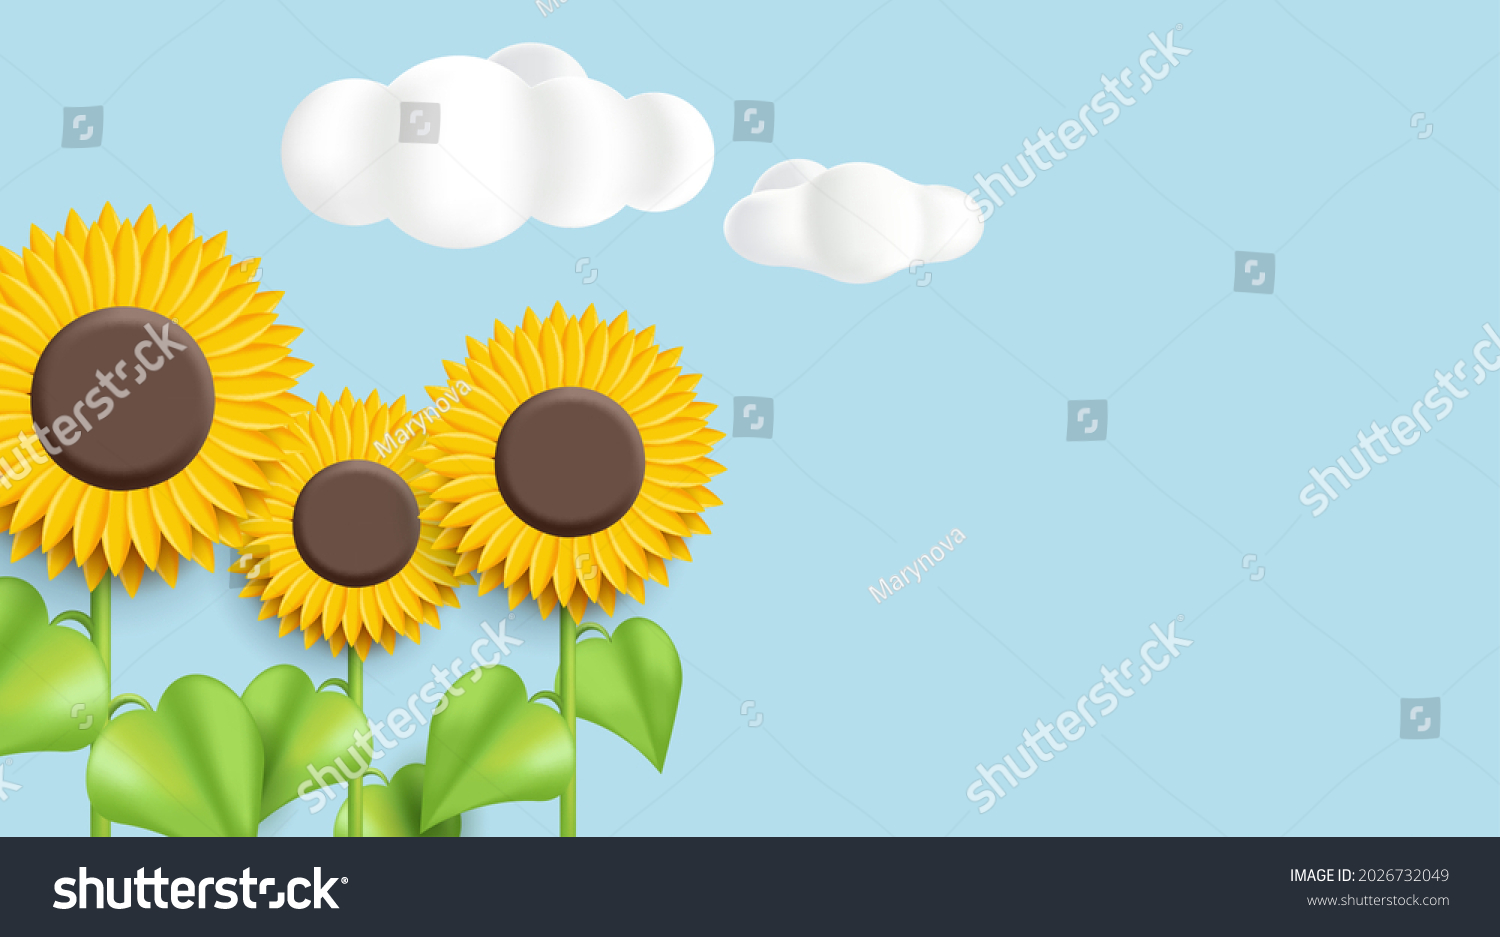 SVG of Sunflower 3d illustration on blue background with clouds svg